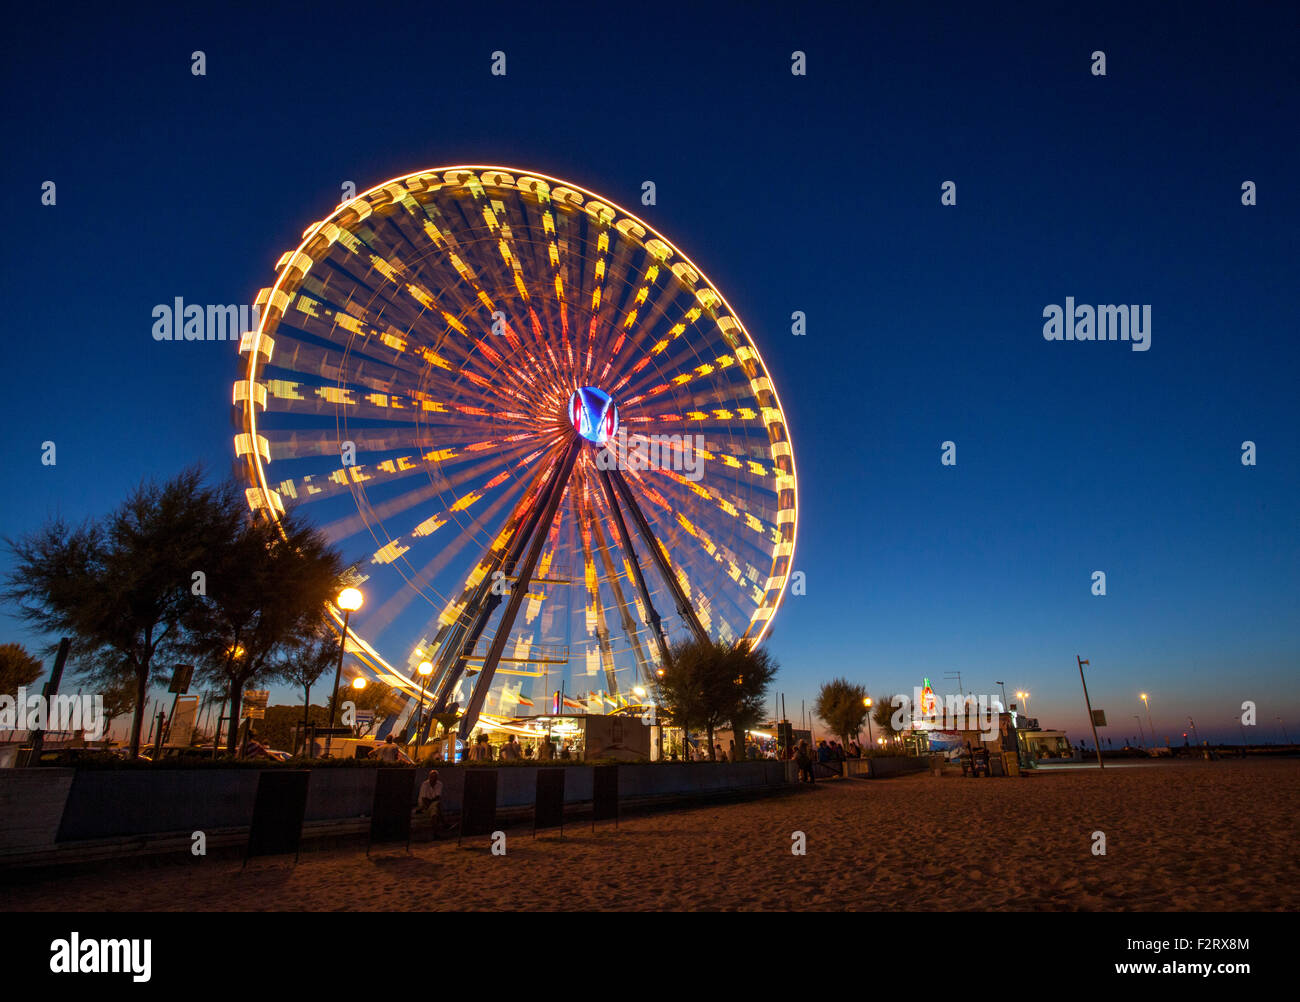 Illuminated Ferris Wheel in blurred motion Stock Photo